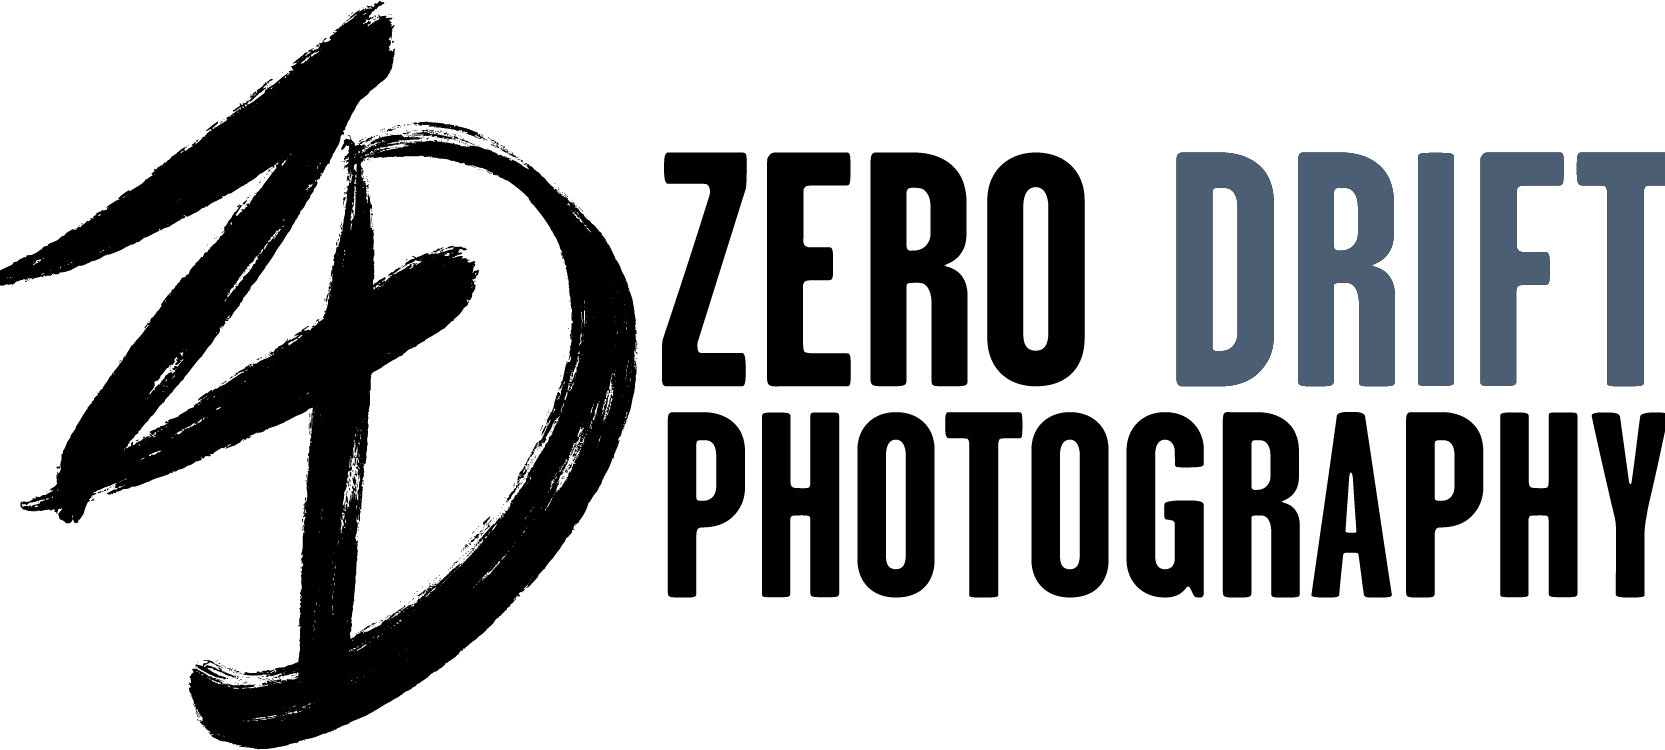 Zero Drift Photography